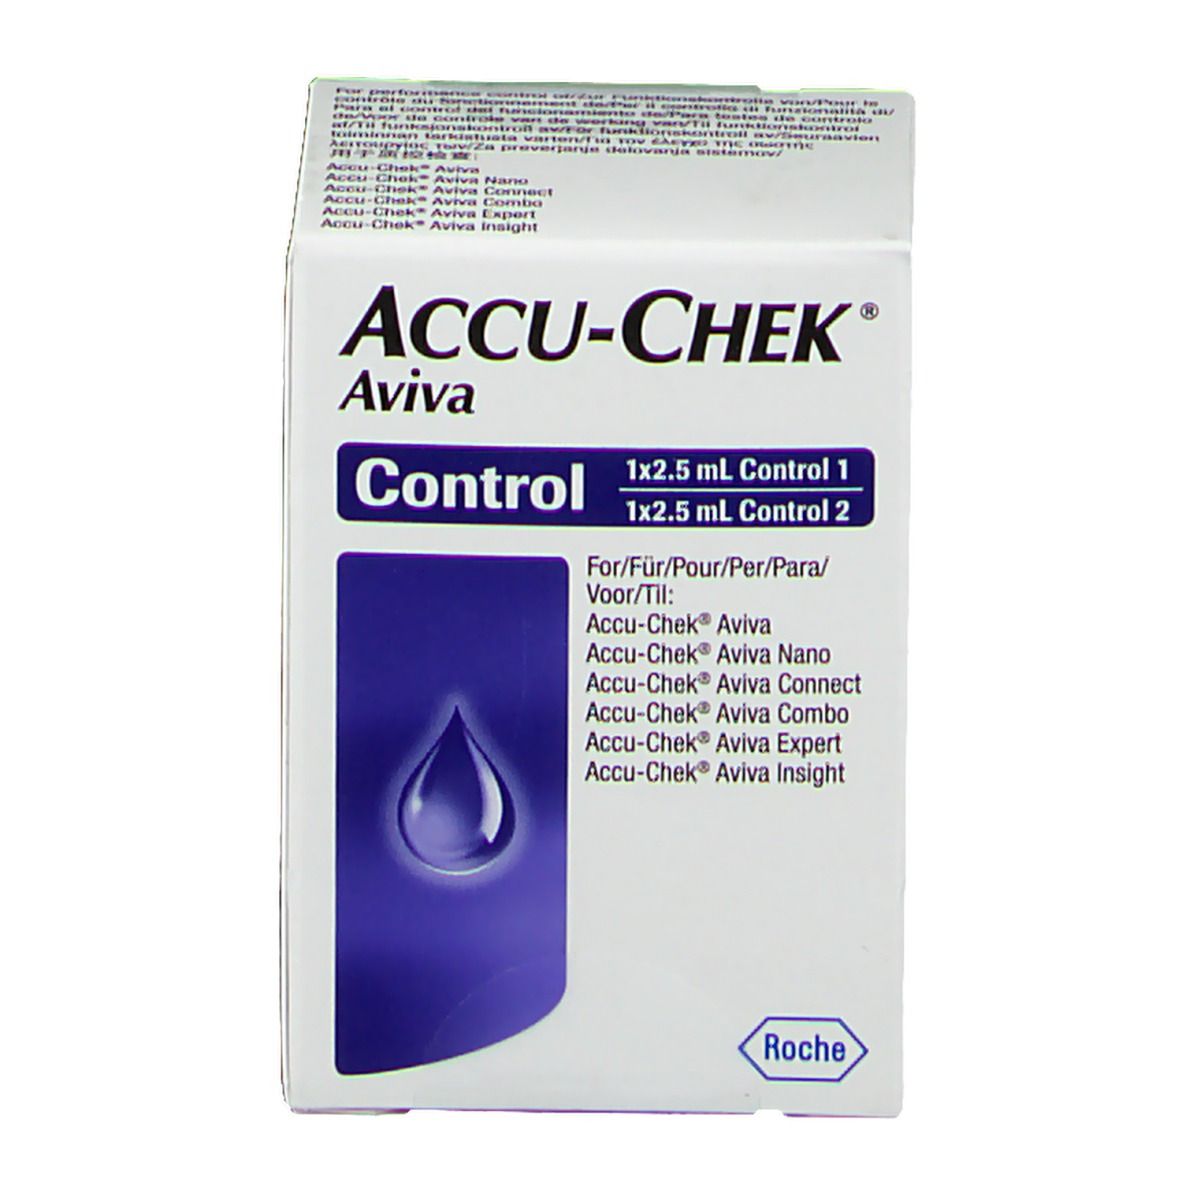 ACCU-CHEK® Aviva Control